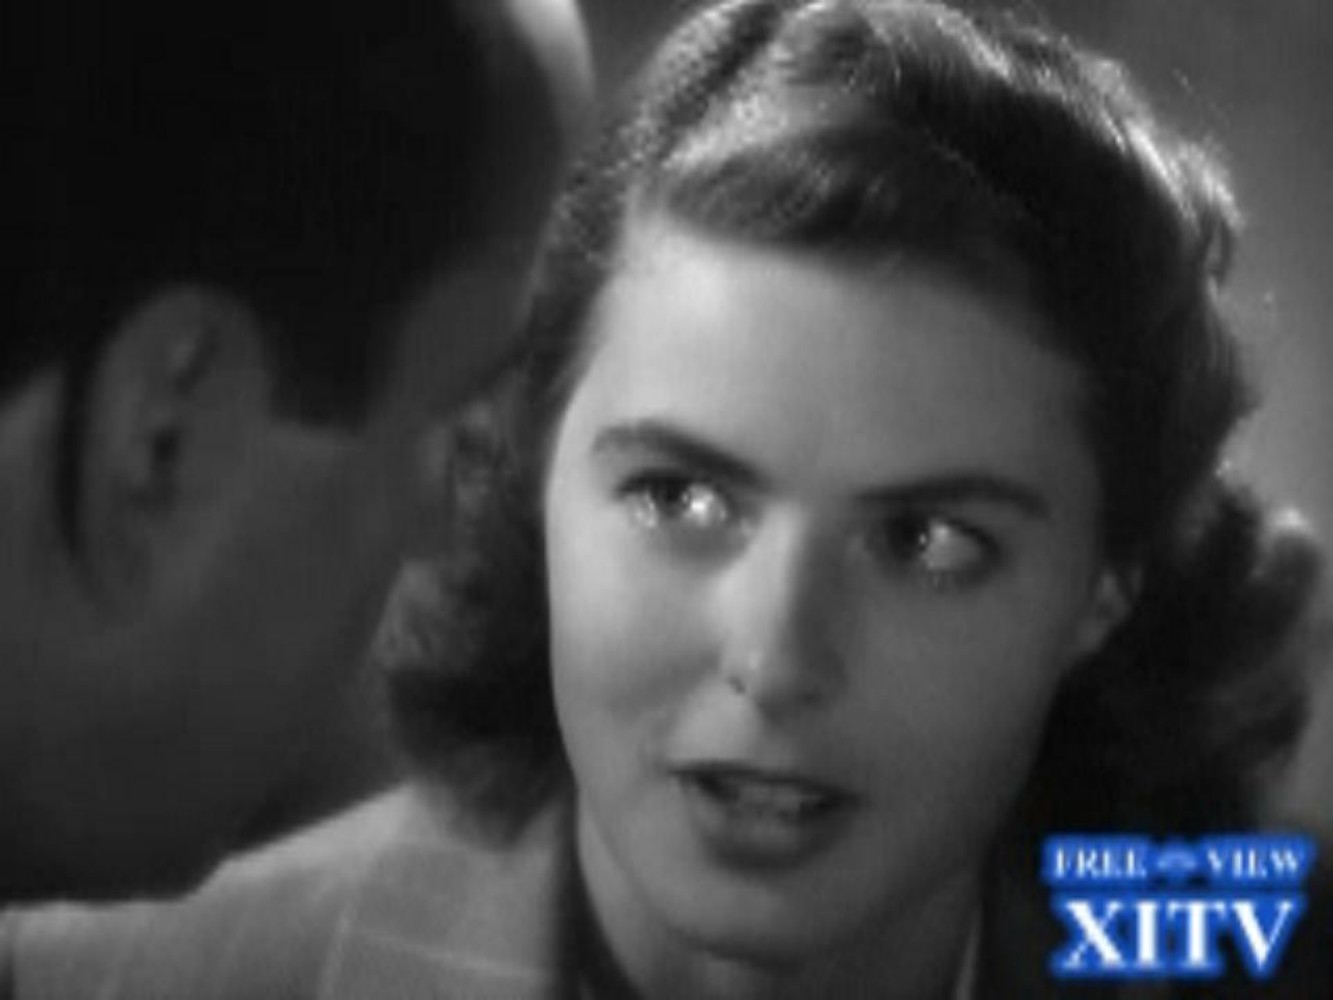 Watch Now! XITV FREE <> VIEW  "CASABLANCA" Starring Ingrid Bergman and Humphrey Bogart! XITV Is Must See TV! 